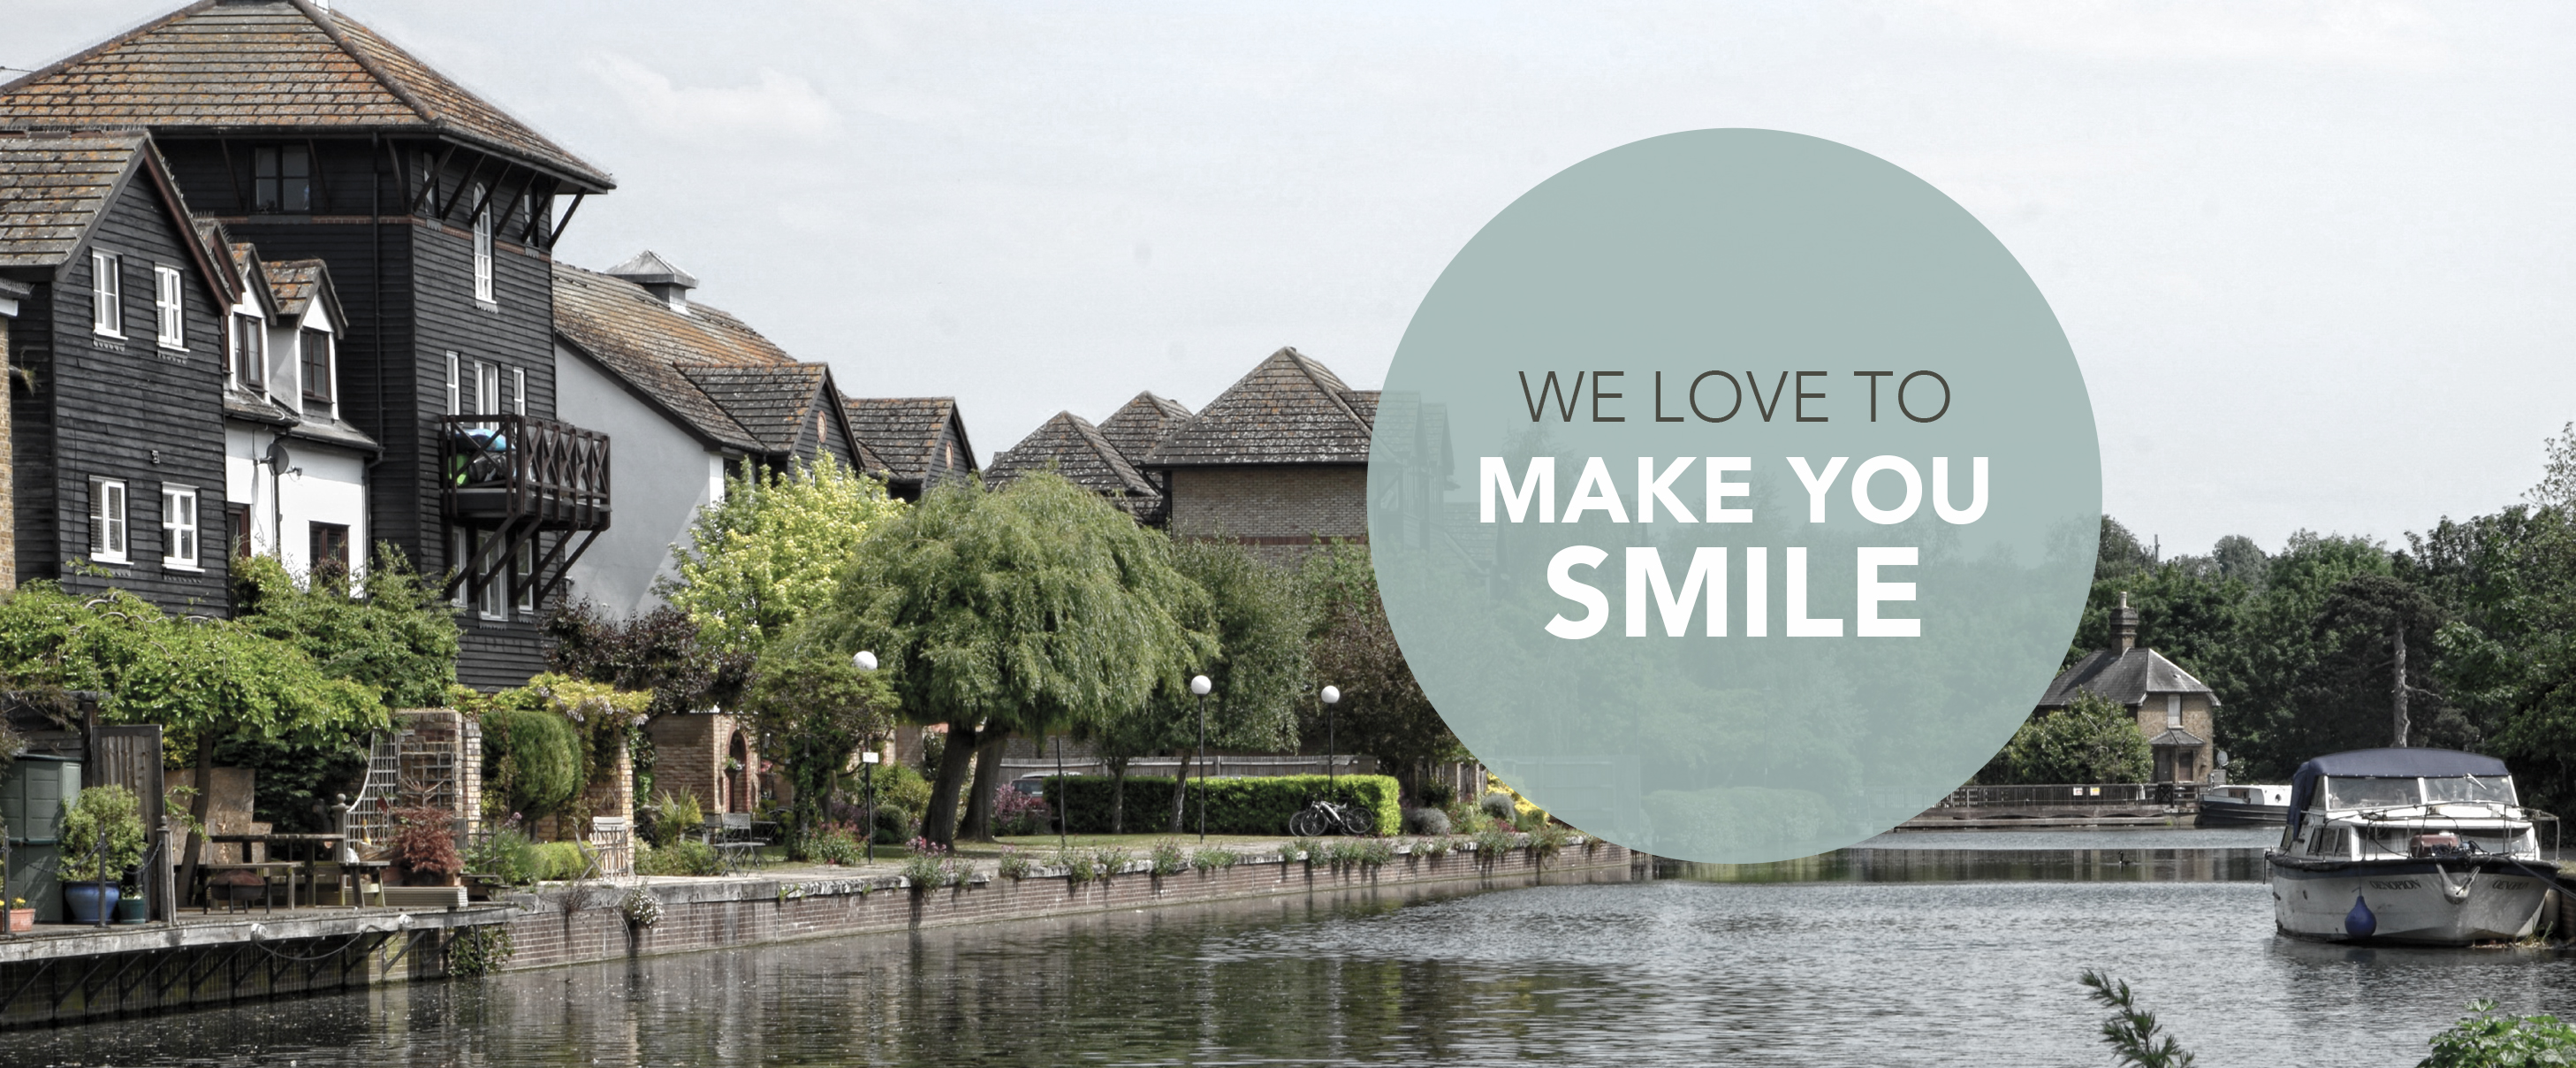 We love to make you smile